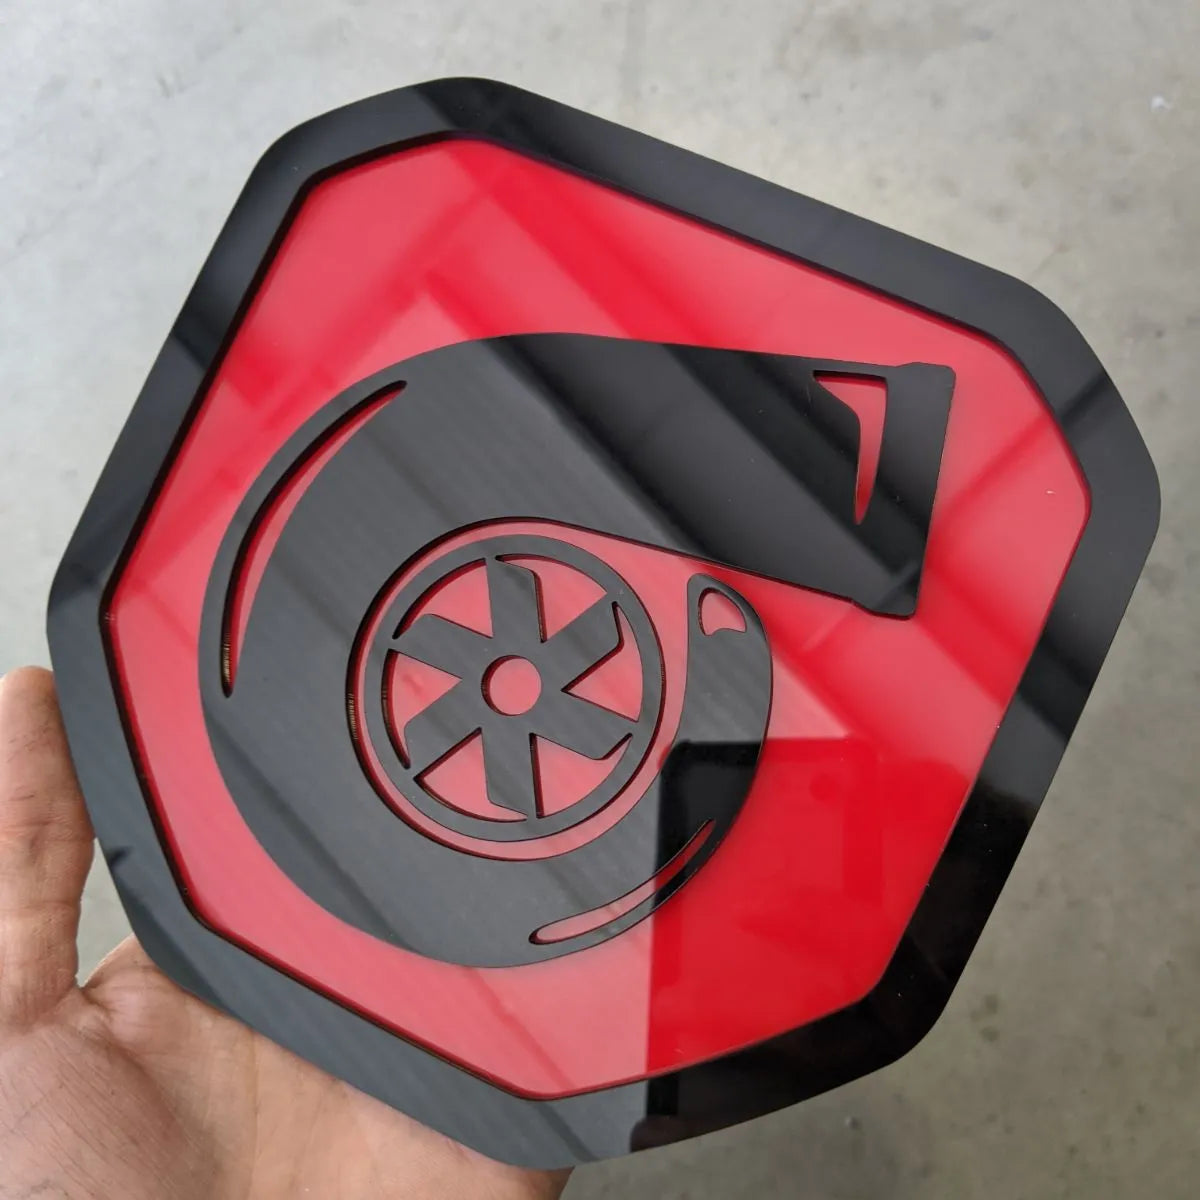 Turbo Badge - Fits 2019+ (5th Gen) Dodge® Ram® Tailgate -1500, 2500, 3500 - Black on Red